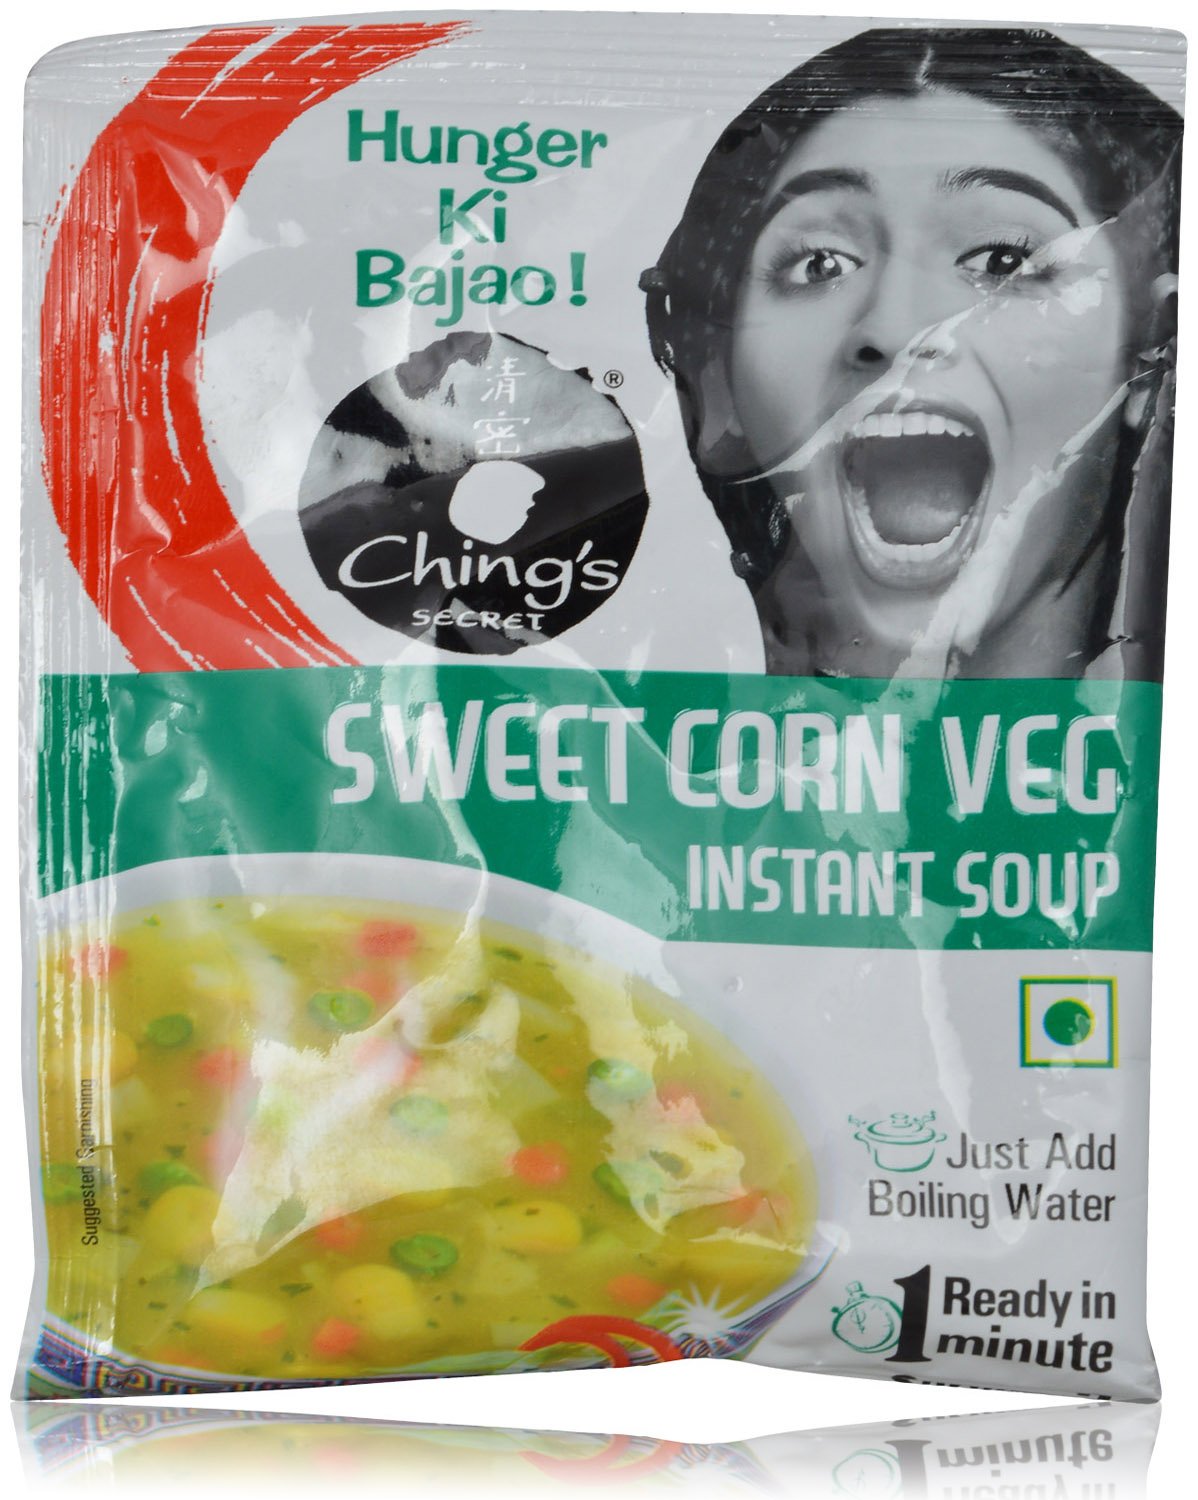 Ching's Secret Sweet Corn Veg Soup Image